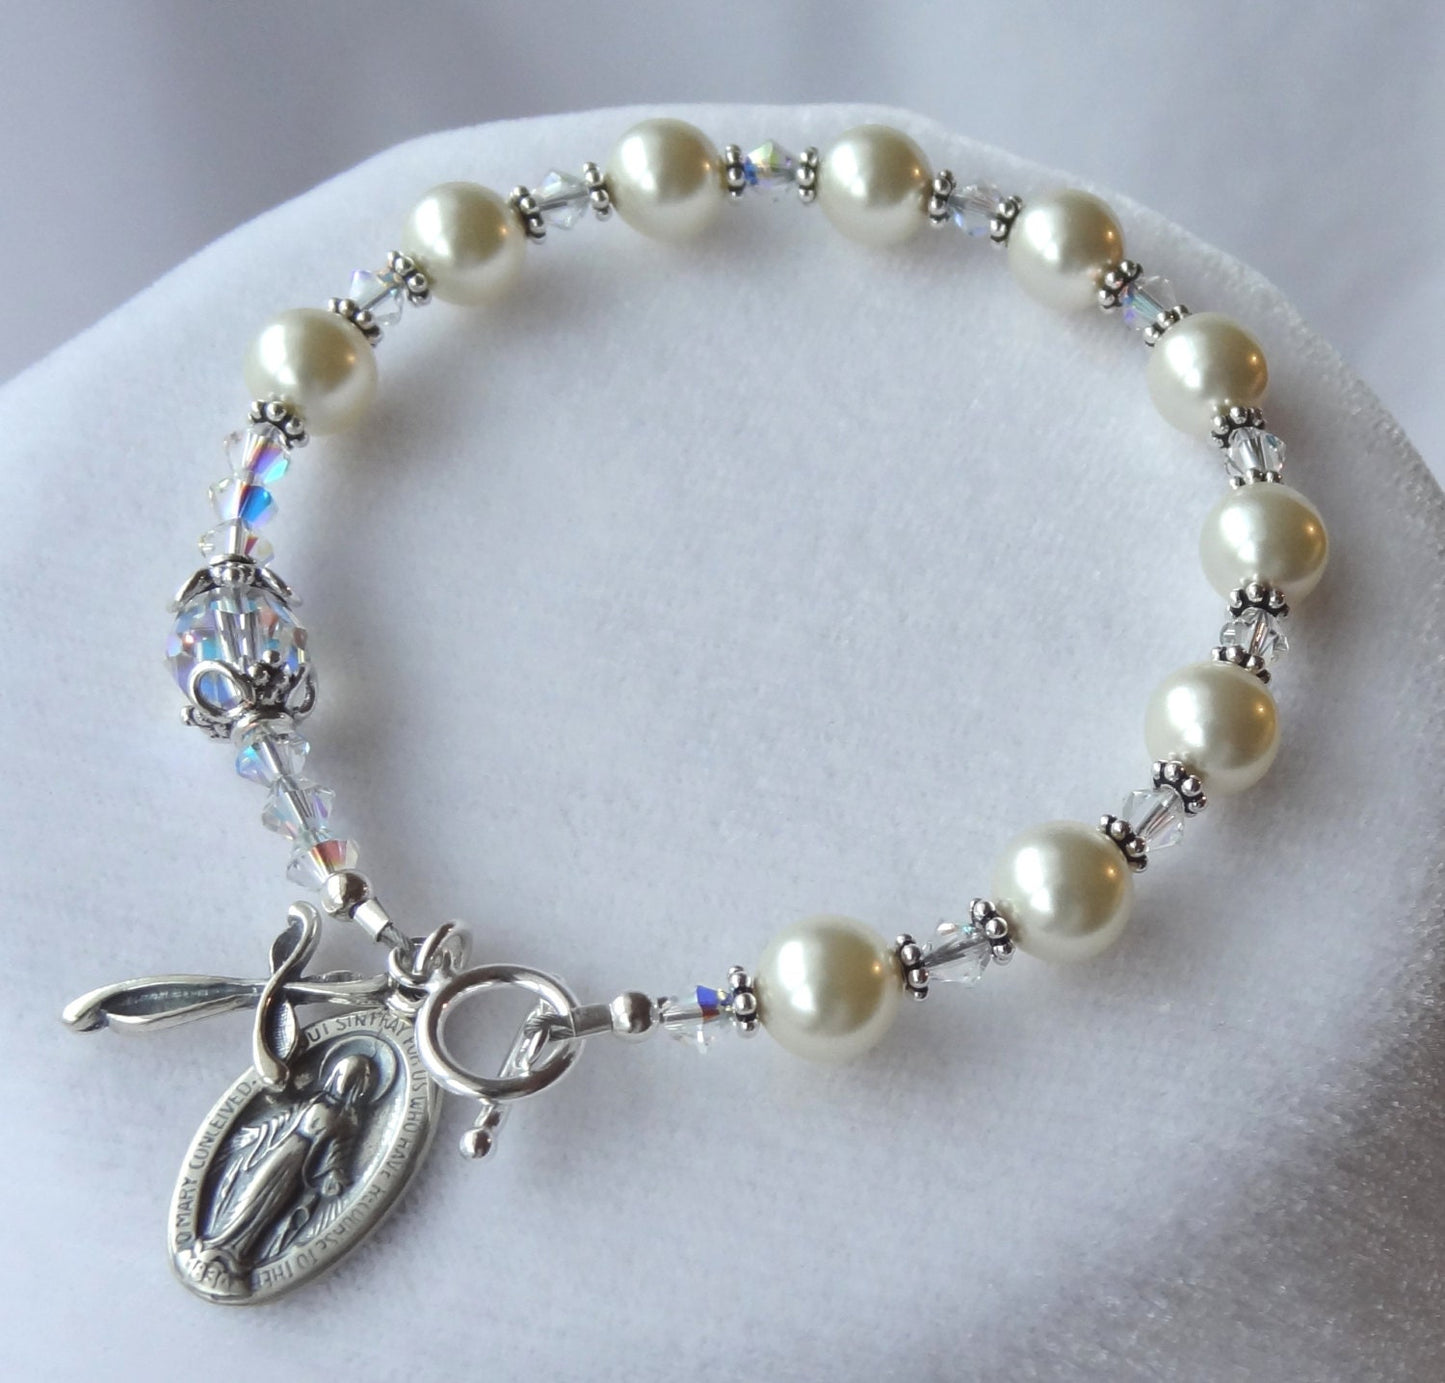 The 7 Gifts of the Holy Spirit Bracelet - Confirmation Bracelet